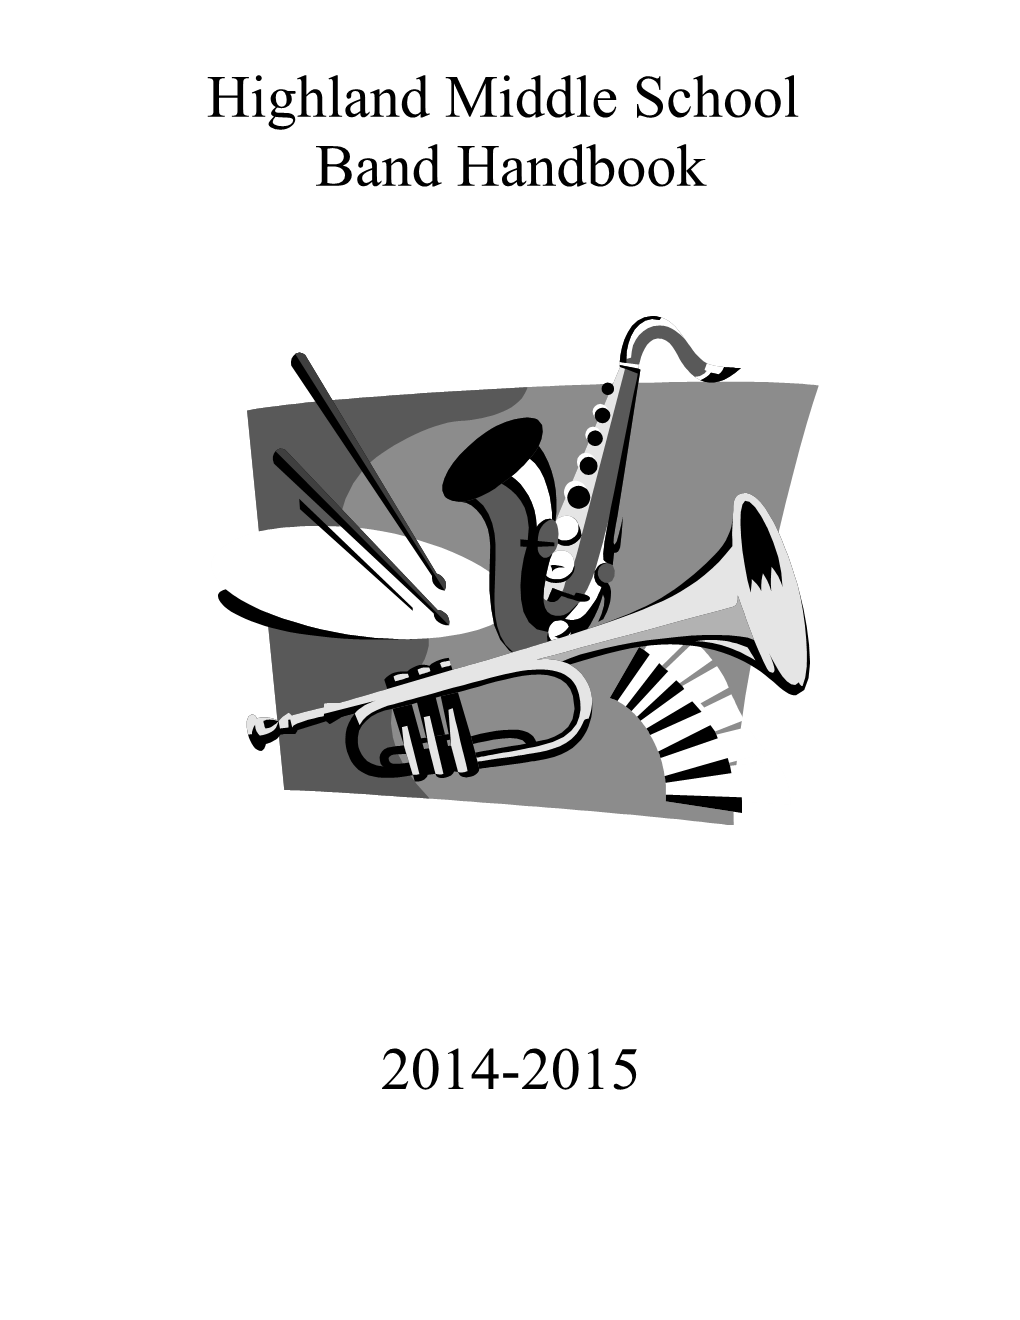 Highland Middle School Band Handbook